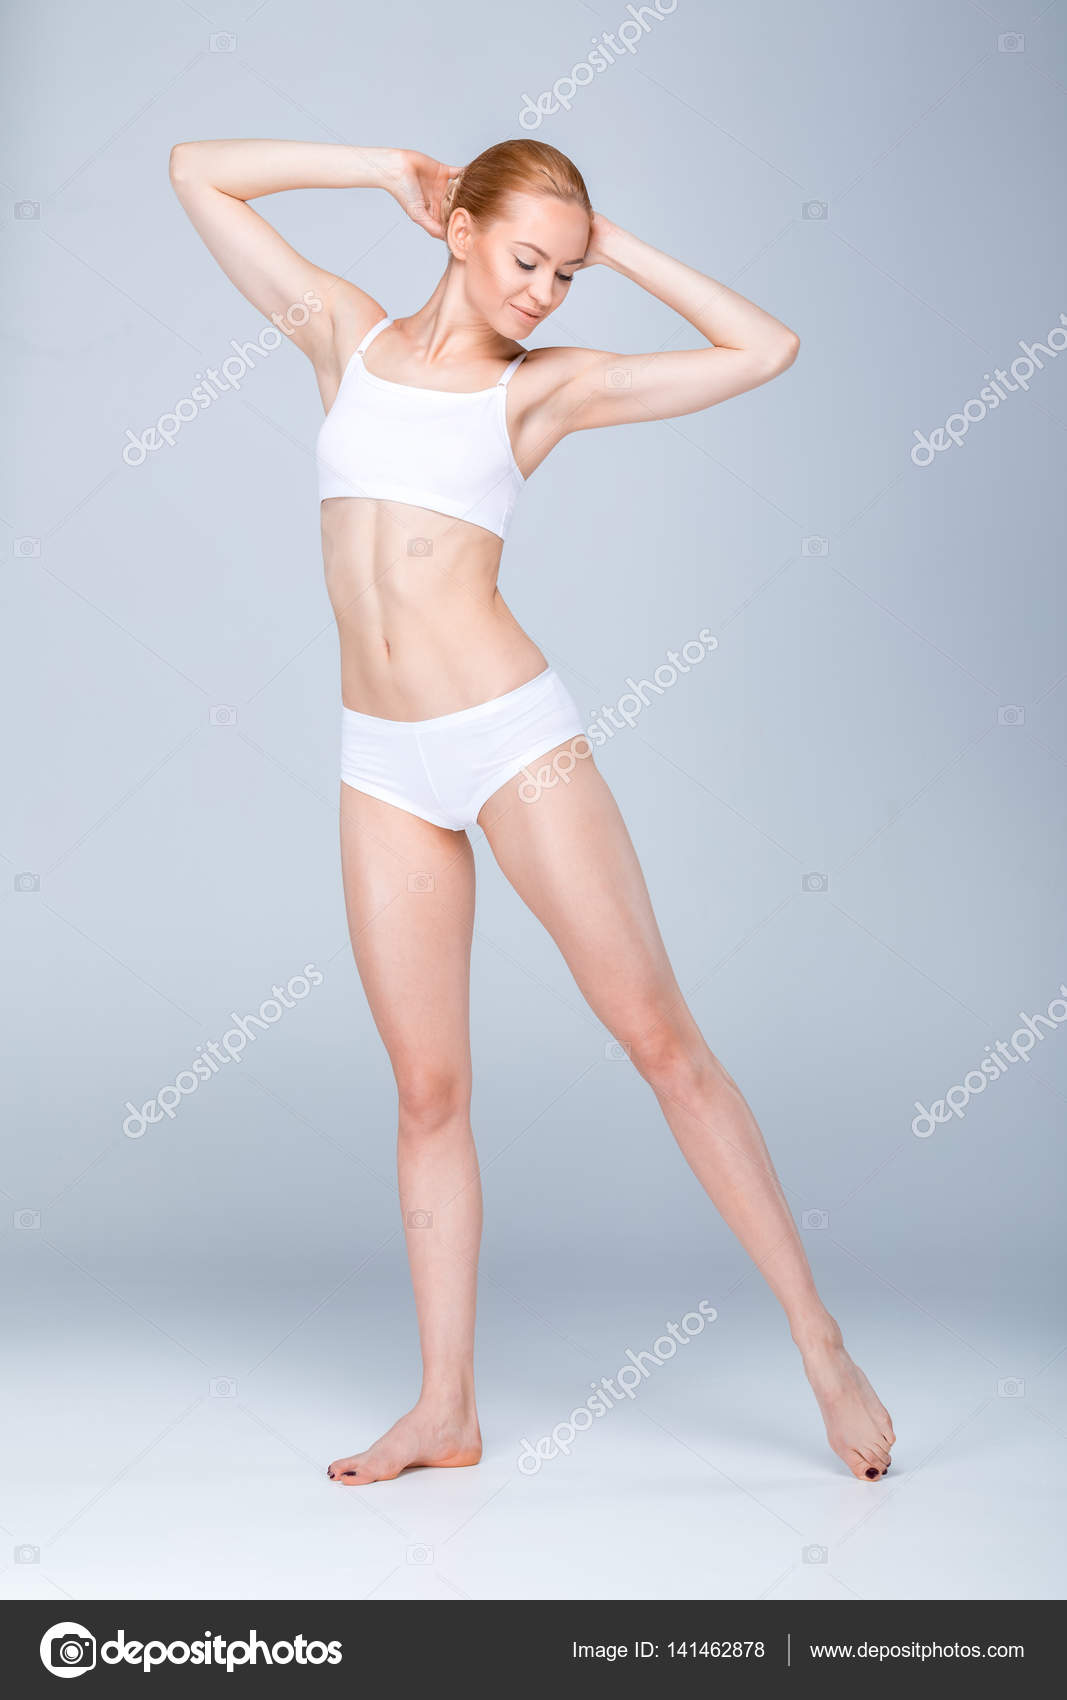 https://st3.depositphotos.com/11433294/14146/i/1600/depositphotos_141462878-stock-photo-slim-woman-in-underwear.jpg